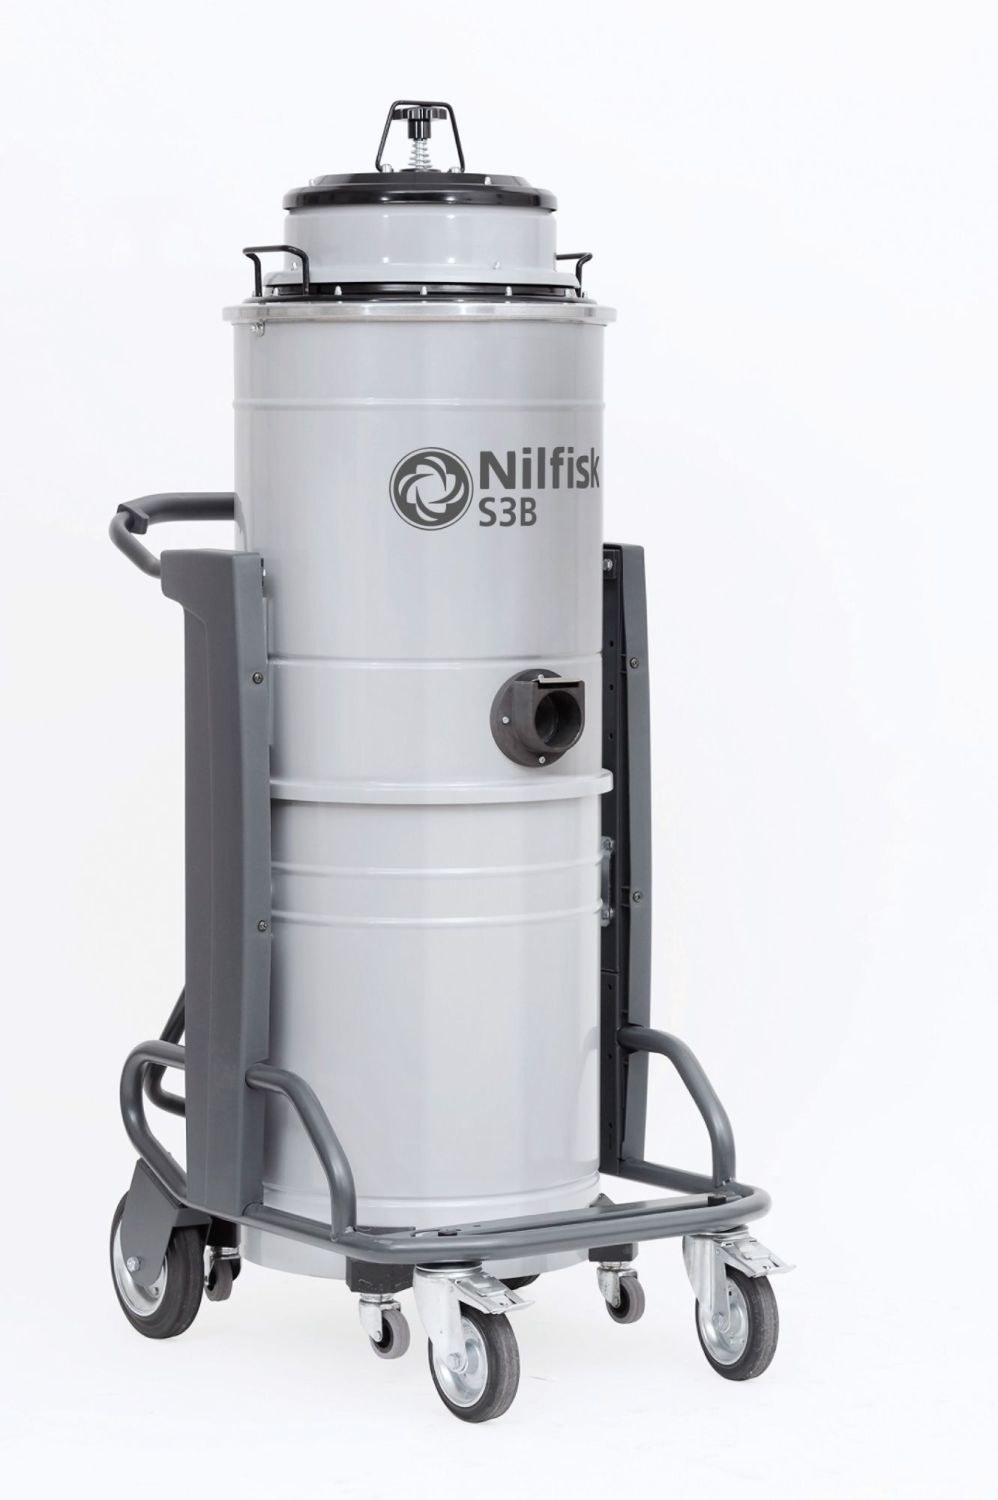 Nilfisk S3B 110v Vacuum